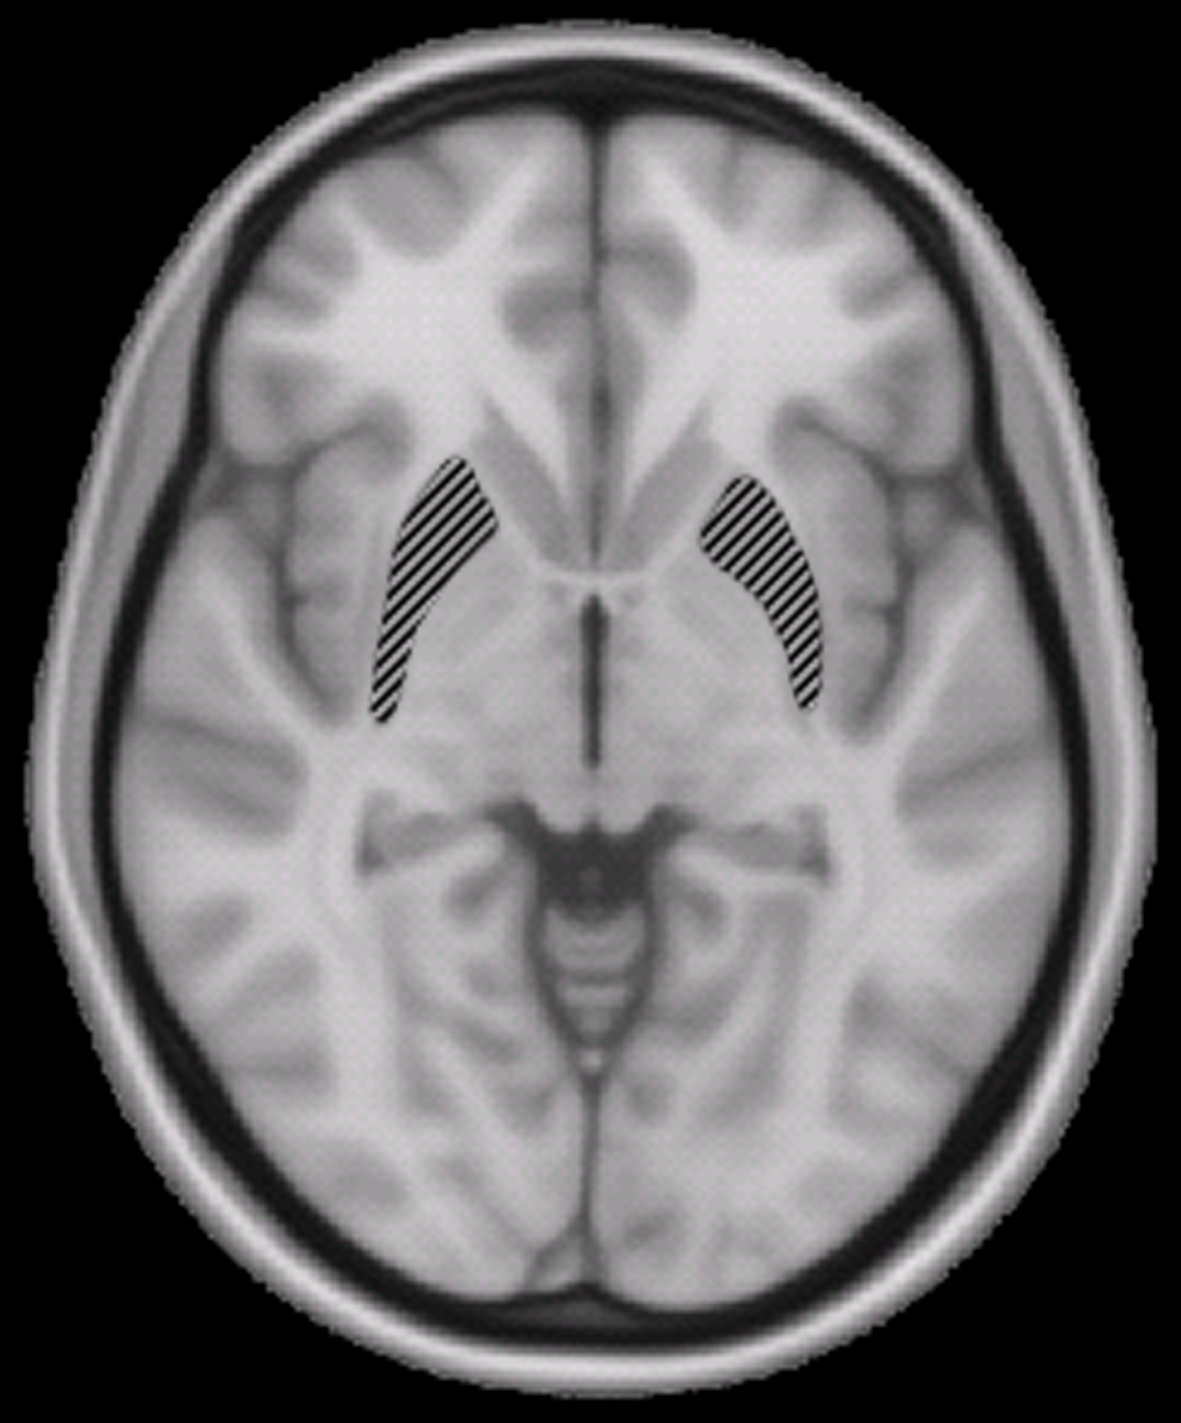 MRI image of the human brain, Putamen highlighted. https://upload.wikimedia.org/wikipedia/commons/a/aa/Putamen.jpg Public domain image